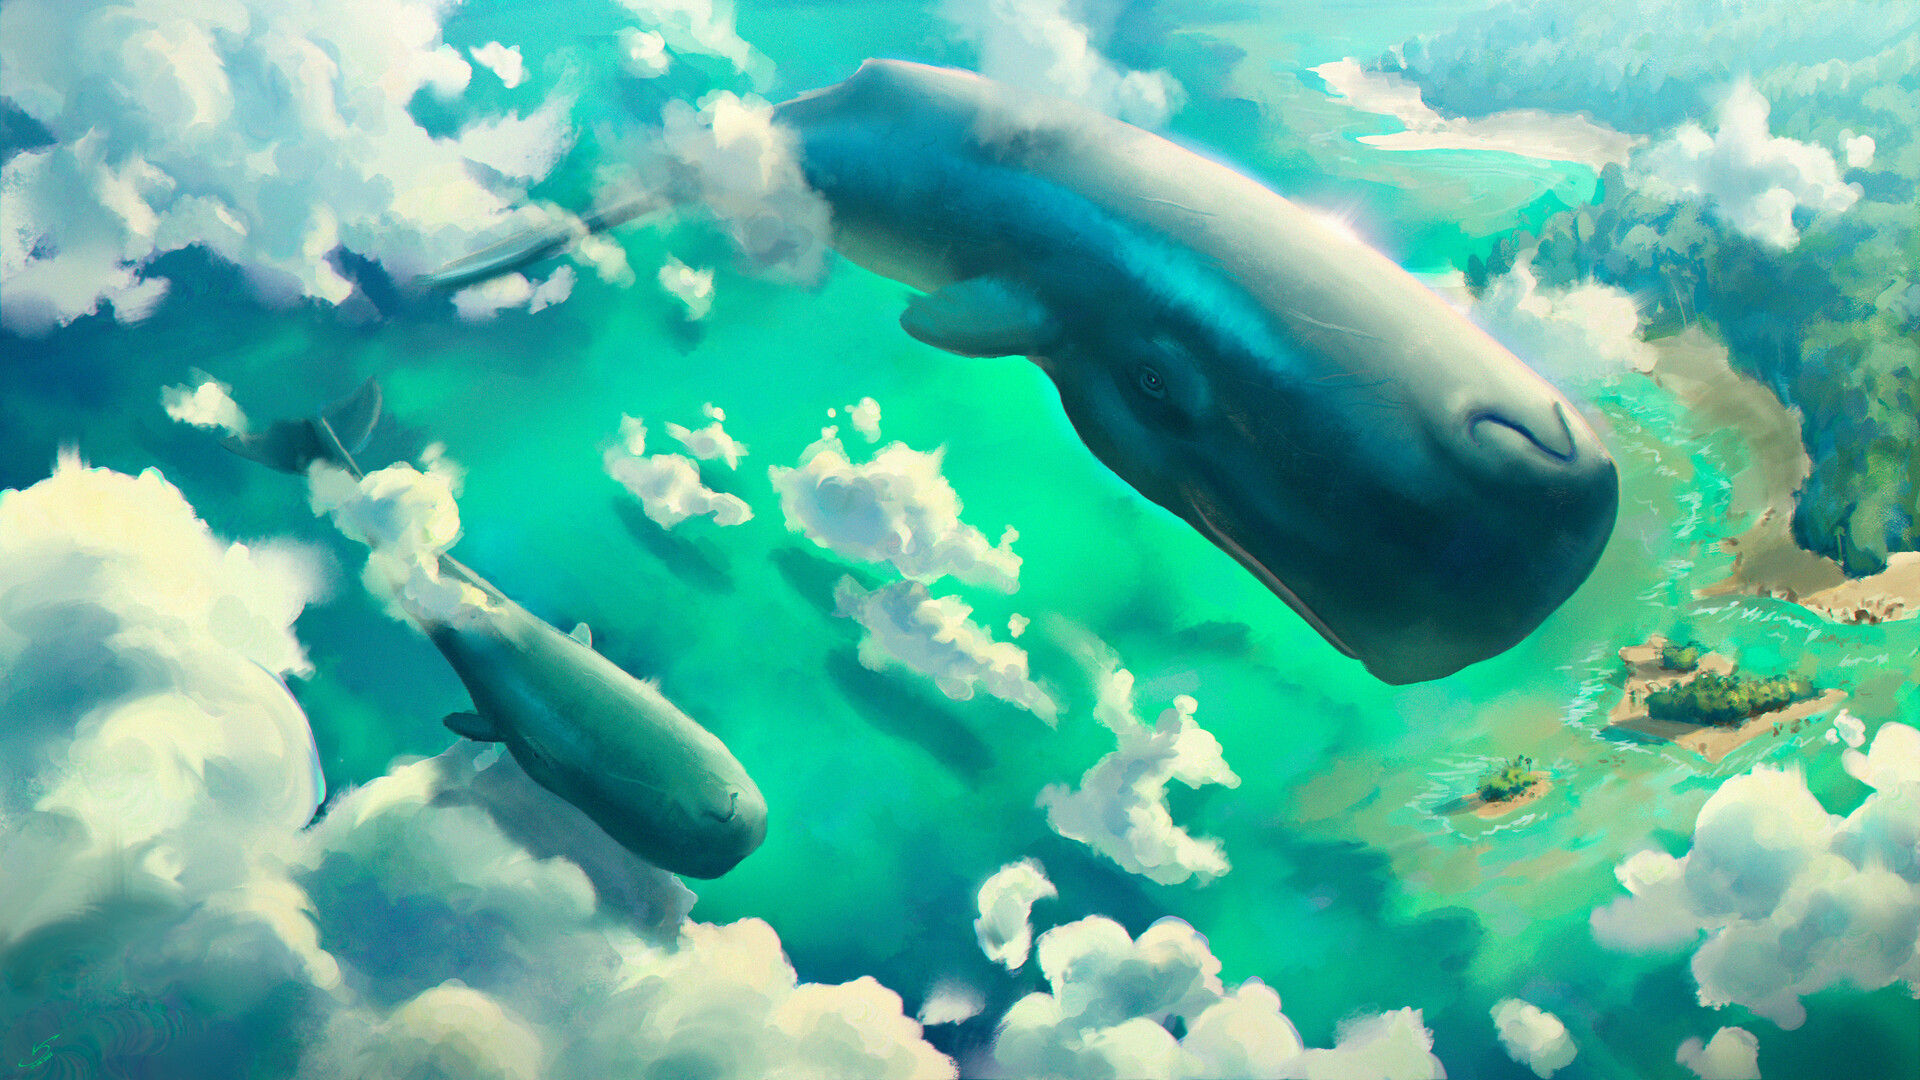 General 1920x1080 Victor Sales digital art fantasy art ArtStation whale sky clouds island animals water high angle